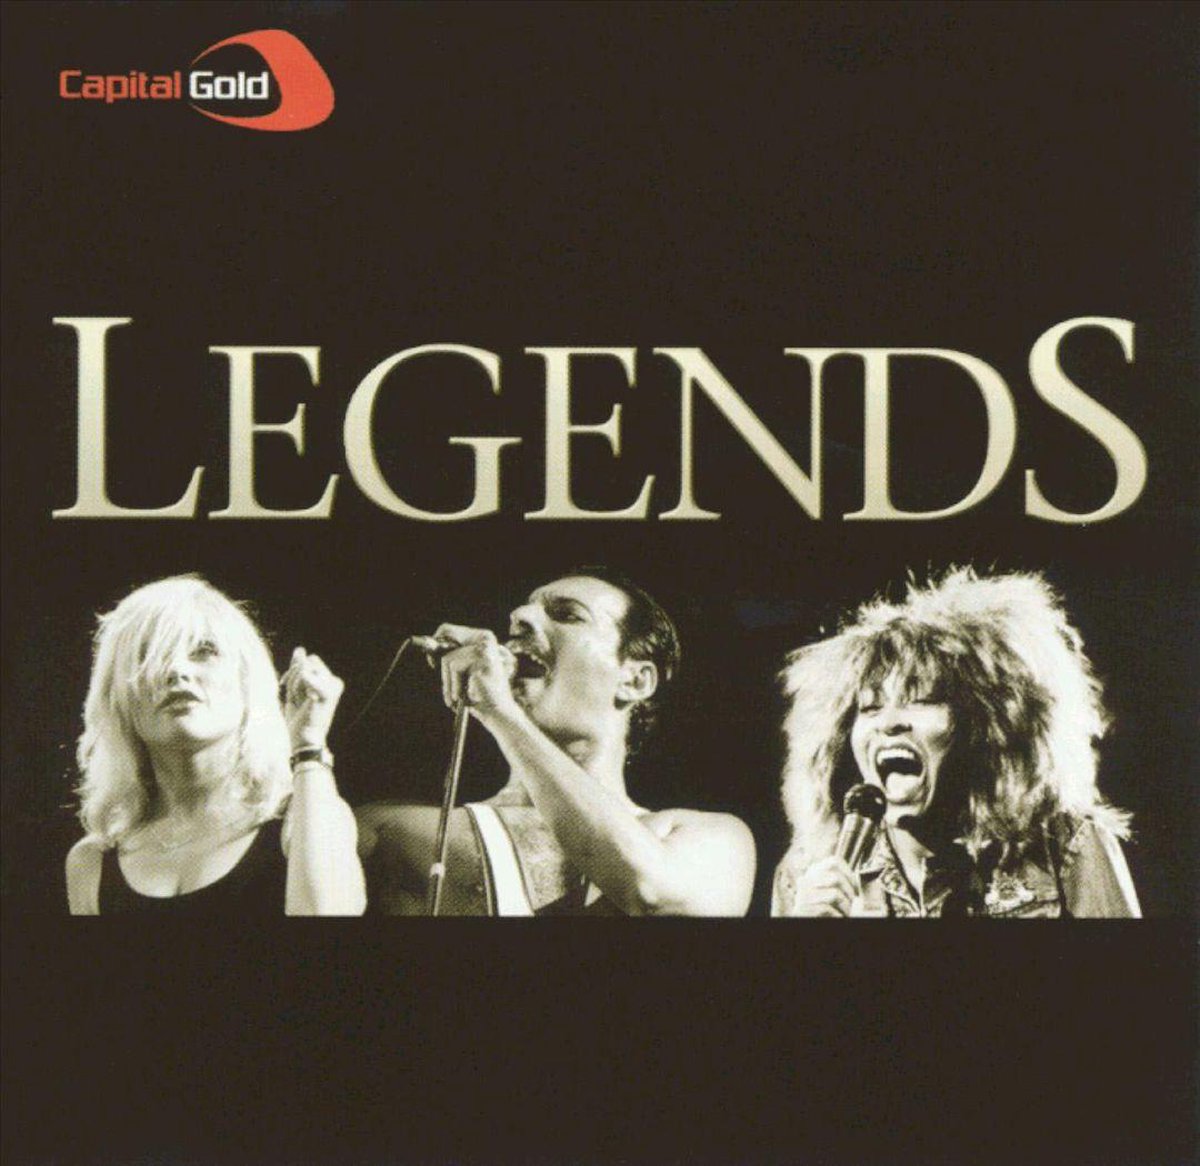 Capital Gold Legends - various artists